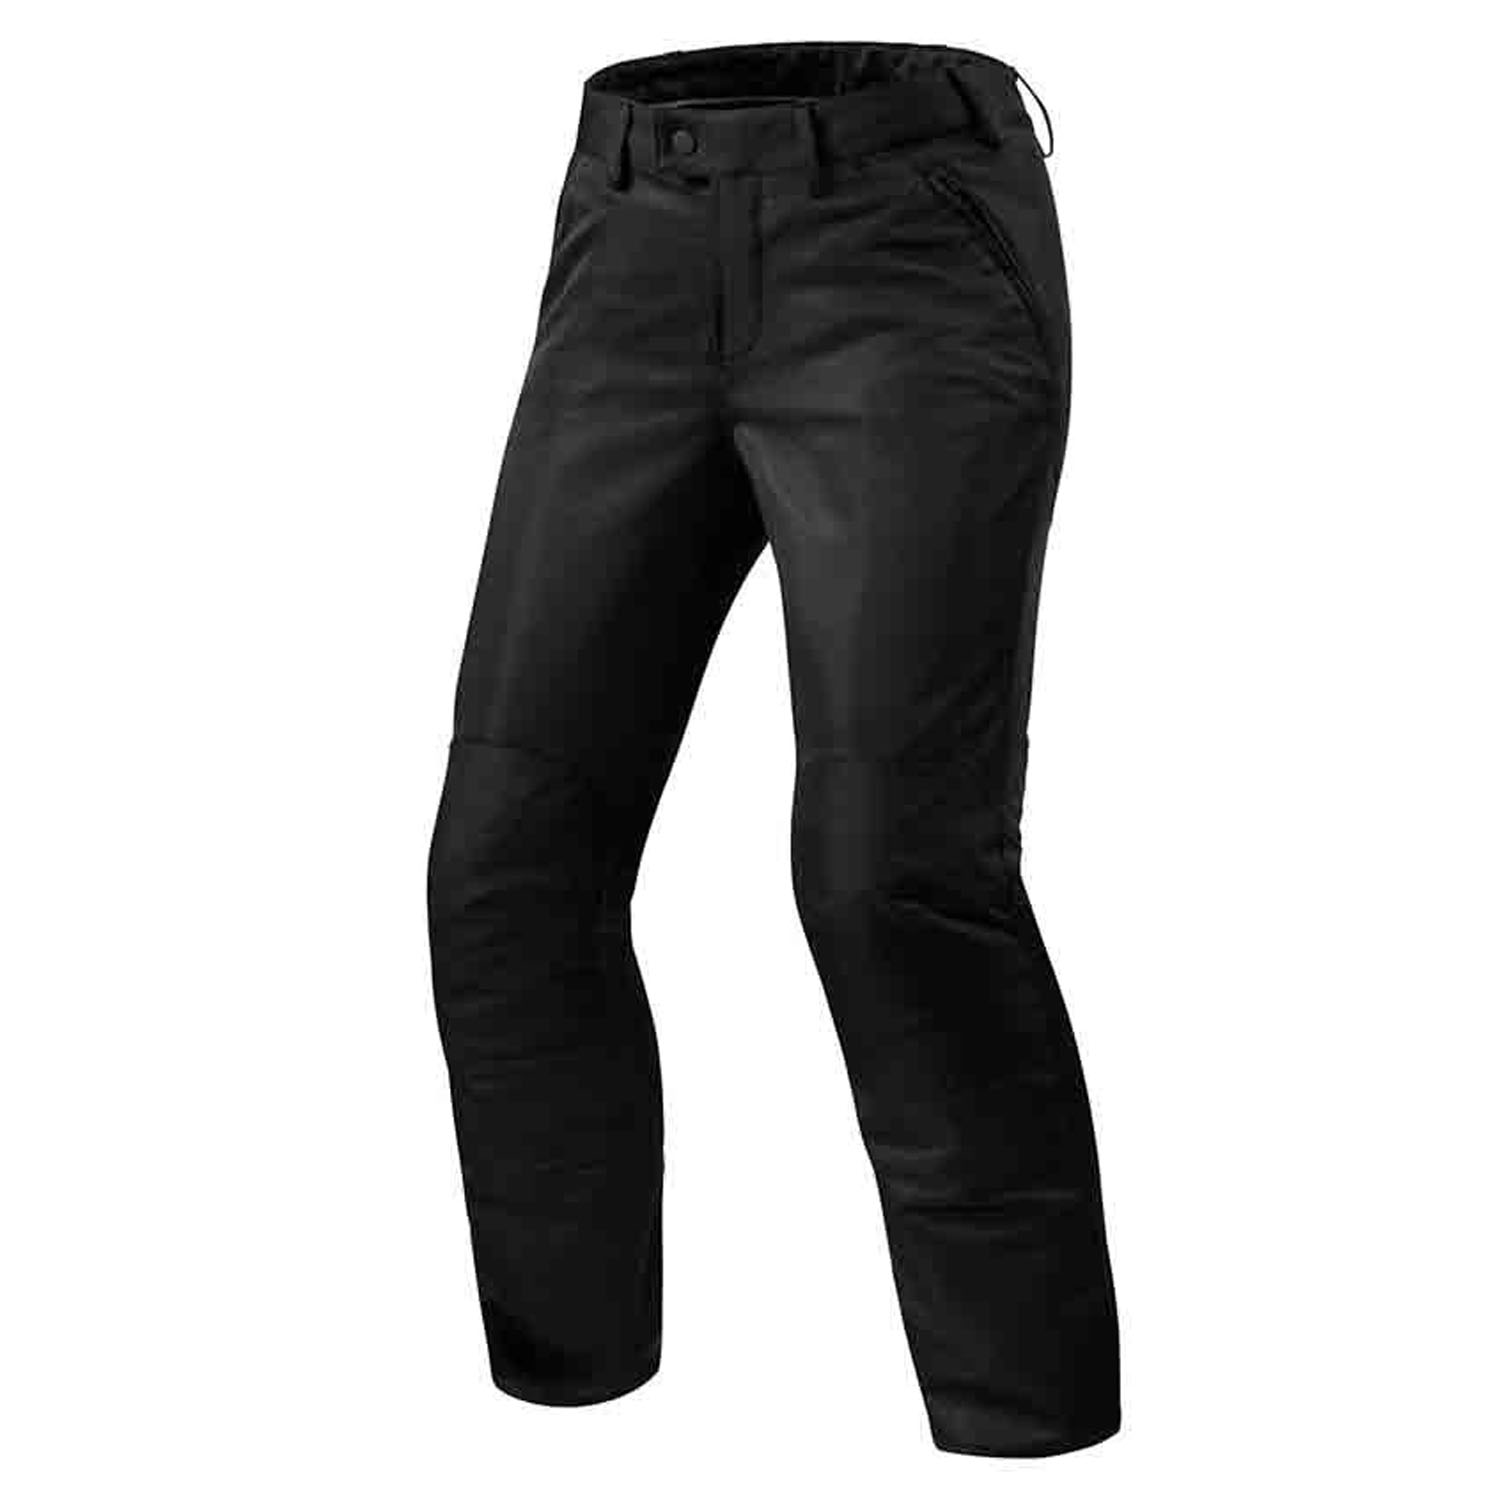 Image of REV'IT! Eclipse 2 Ladies Black Long Motorcycle Pants Size 38 EN